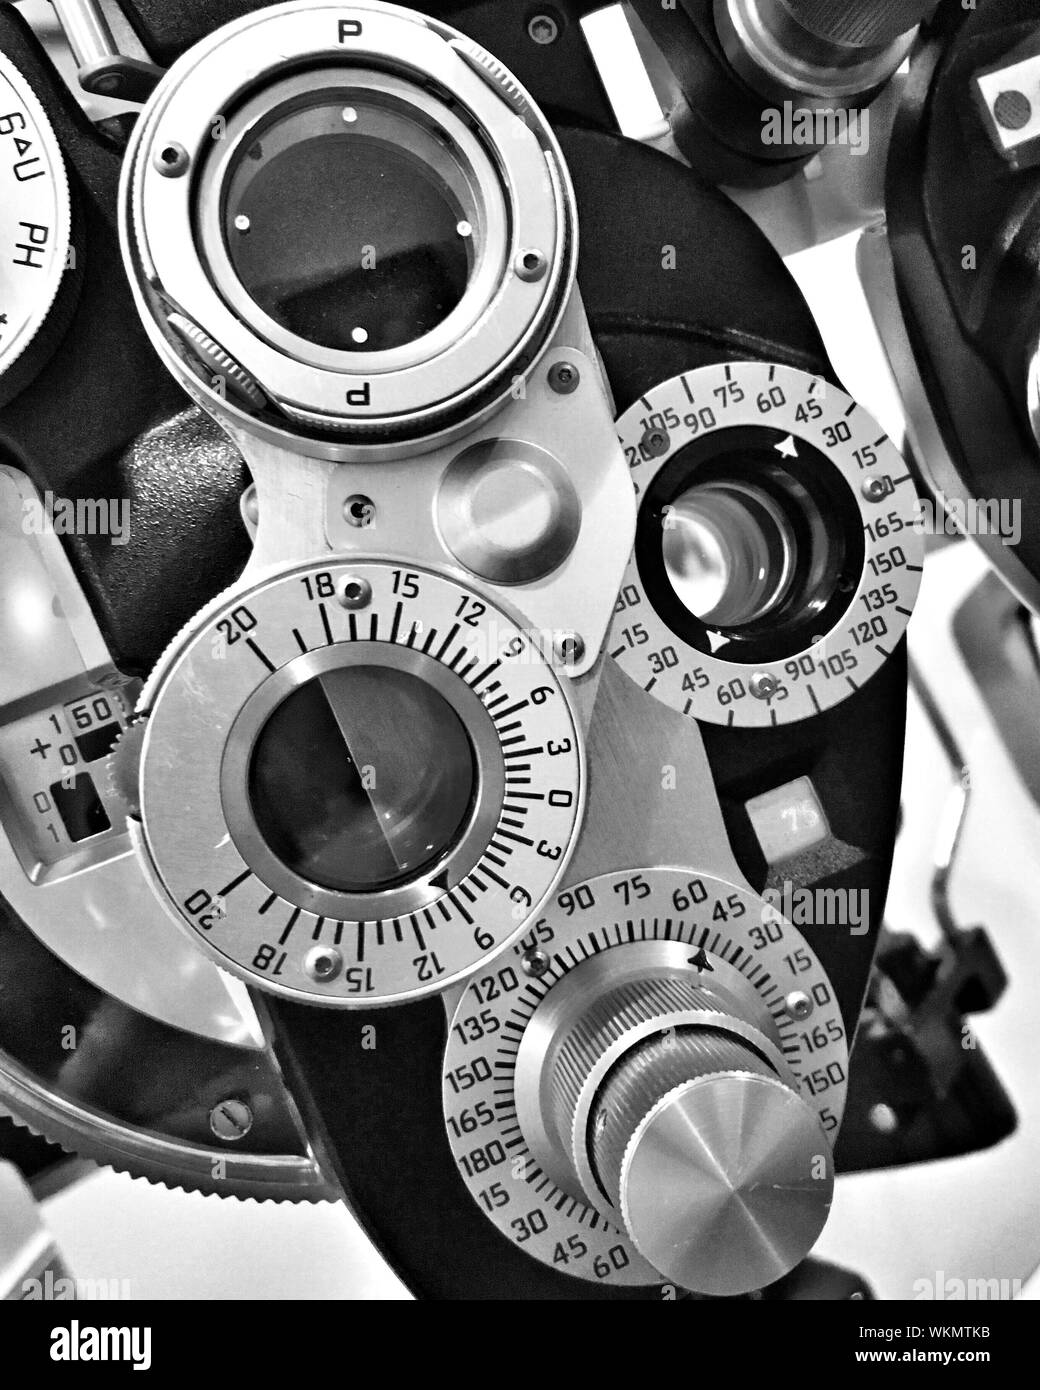 Eye Test Equipment Black And White Stock Photos Image